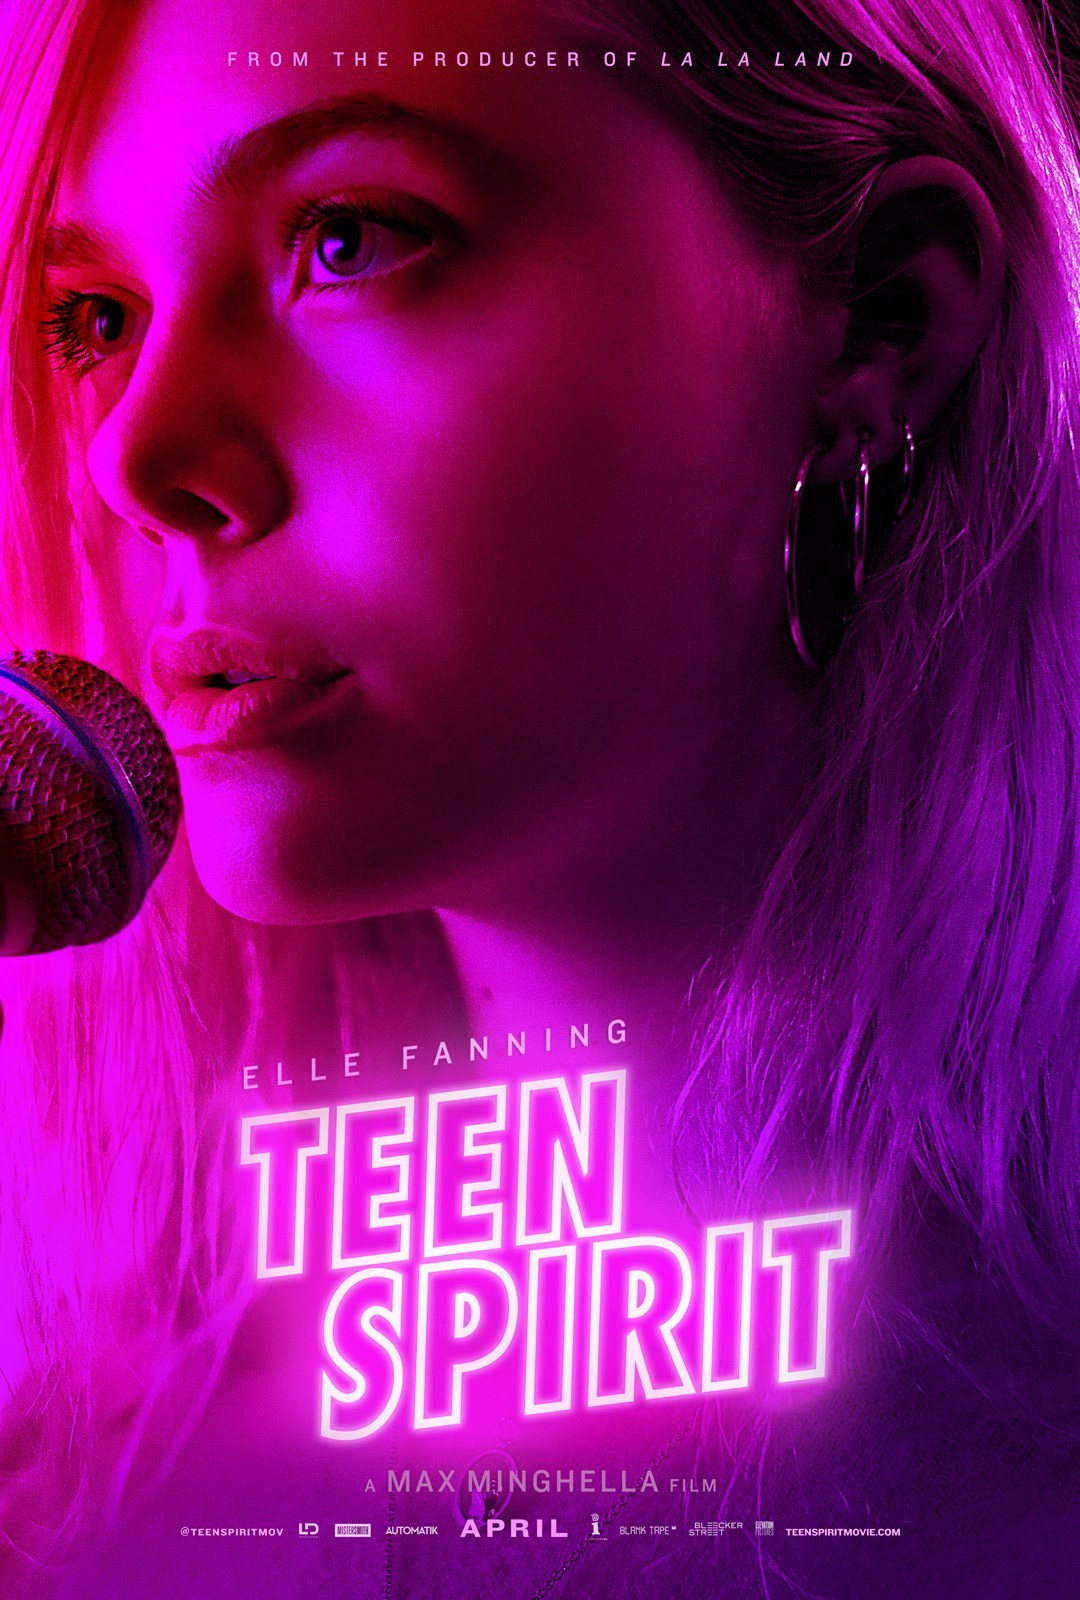 Teen Spirit (2019) Full Movie Free Online